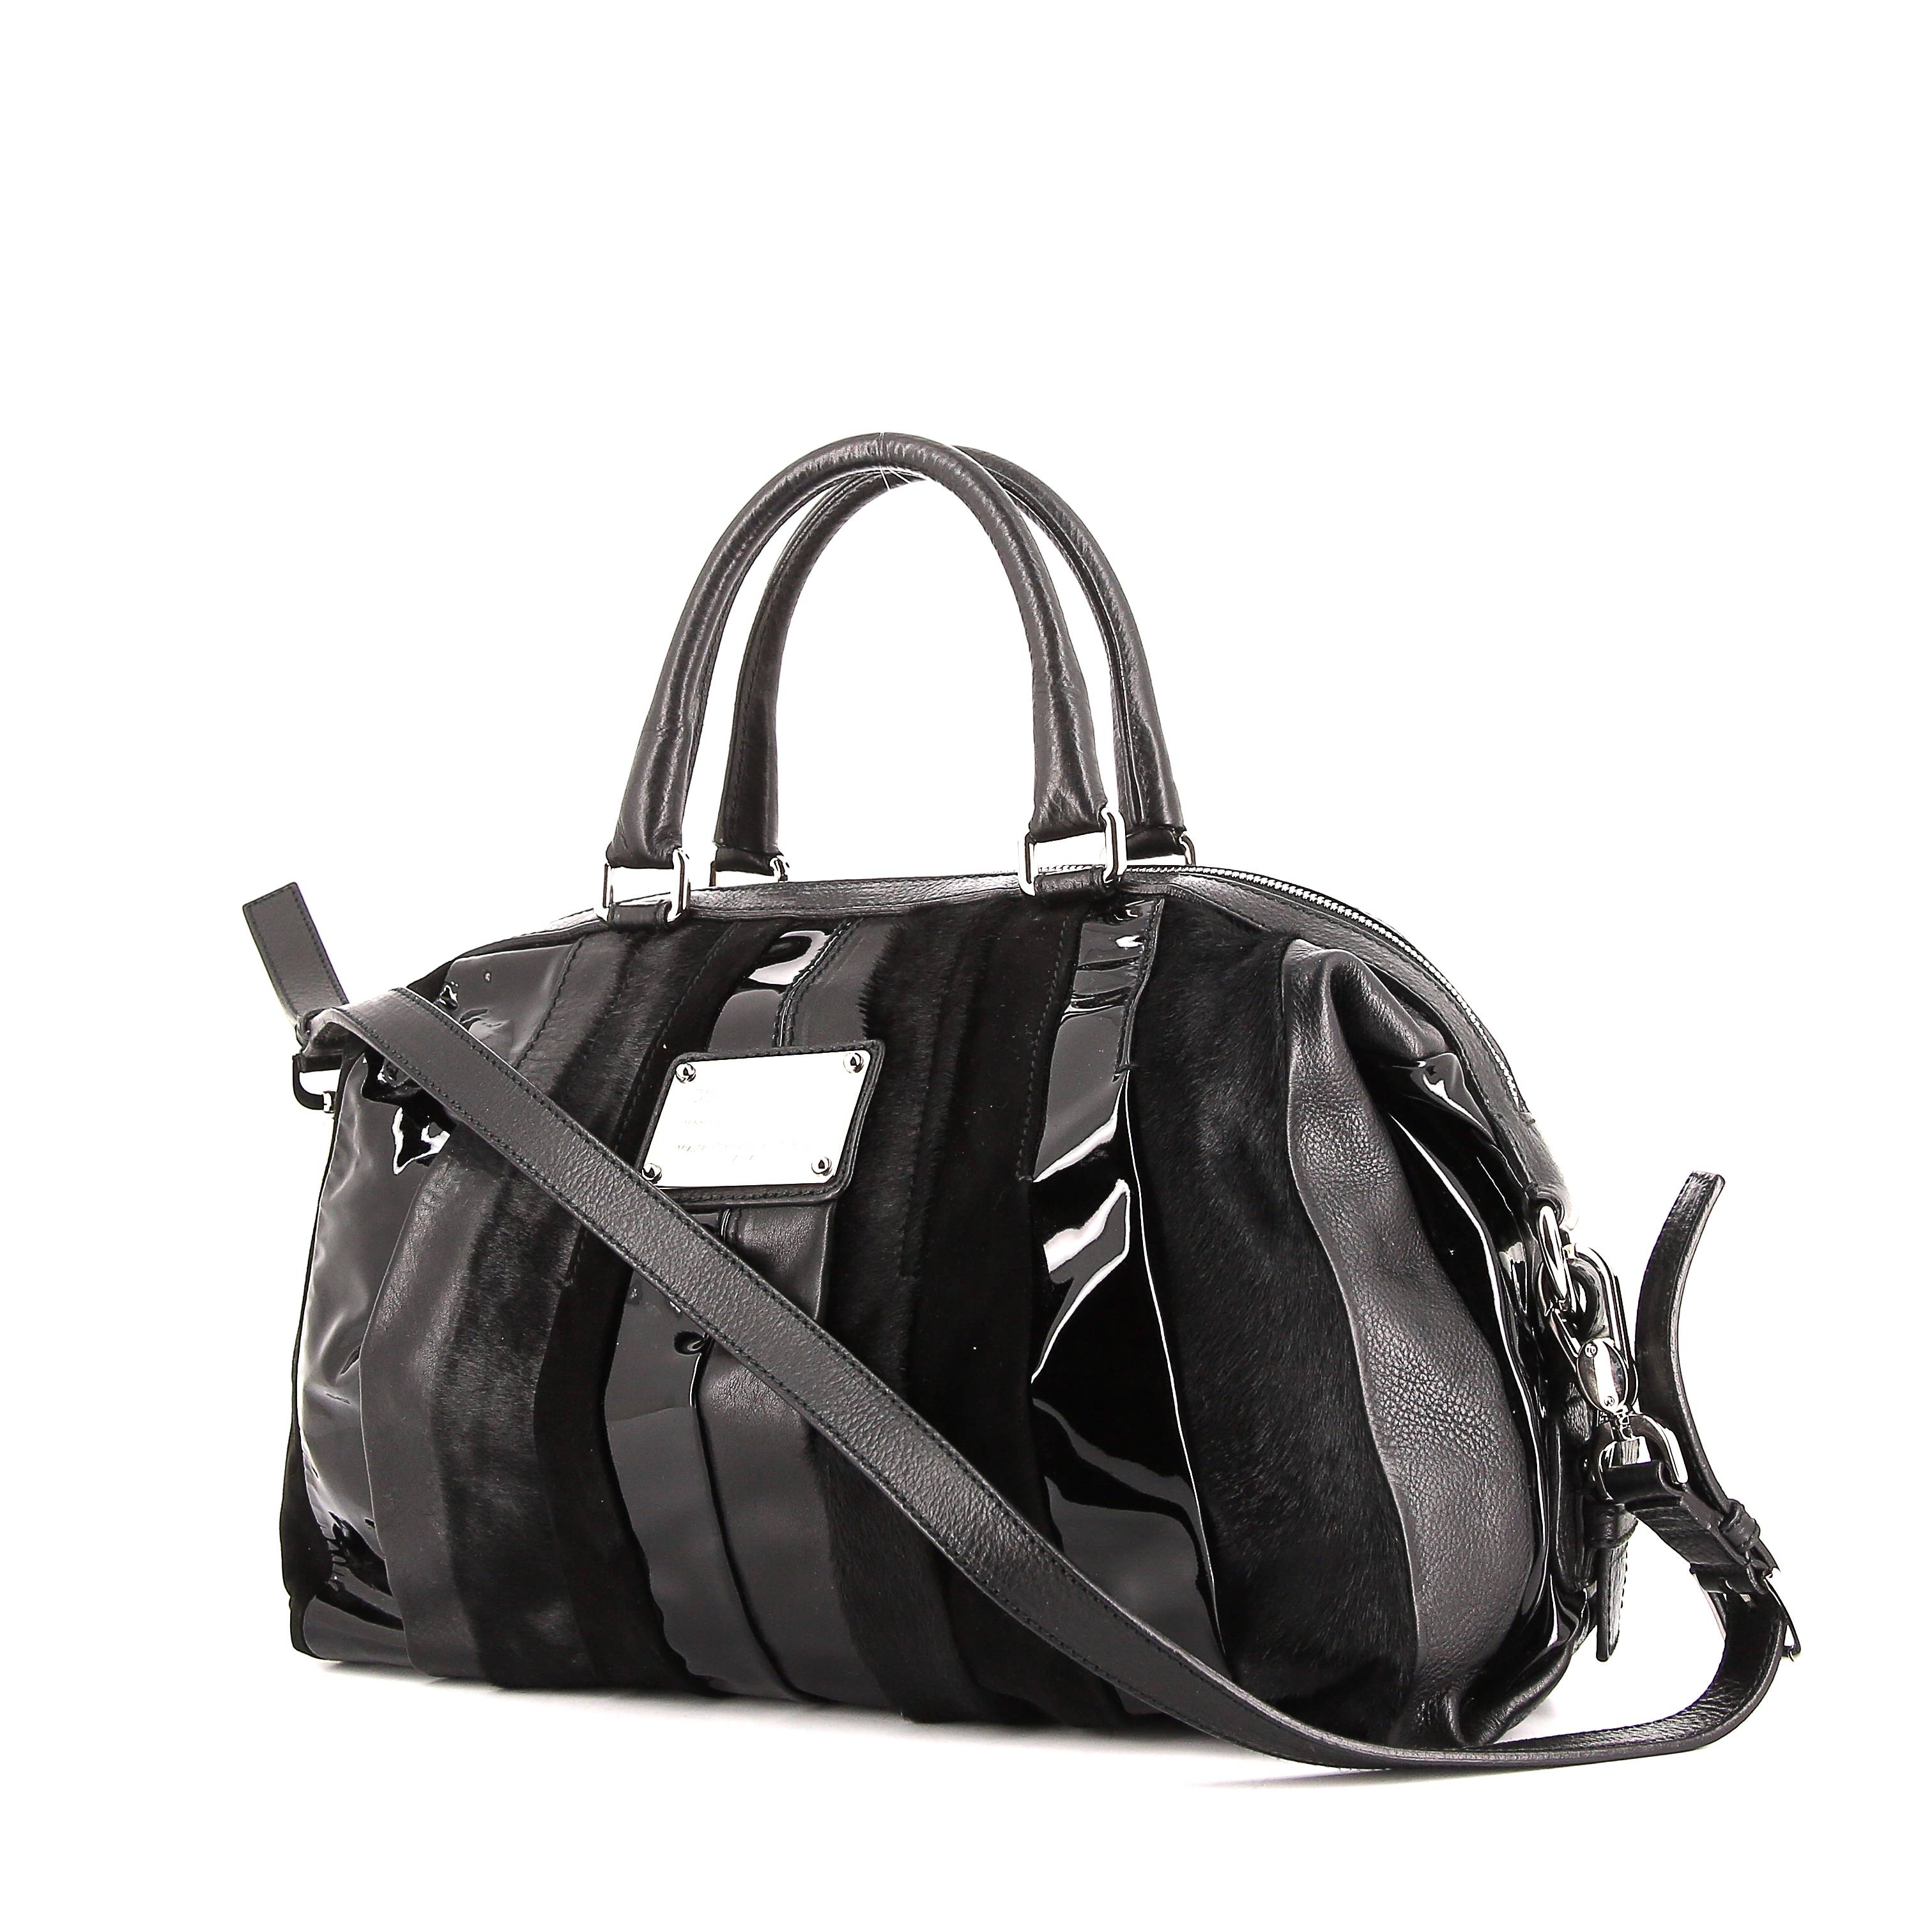 Dolce & Gabbana Handbag in Black | Lyst